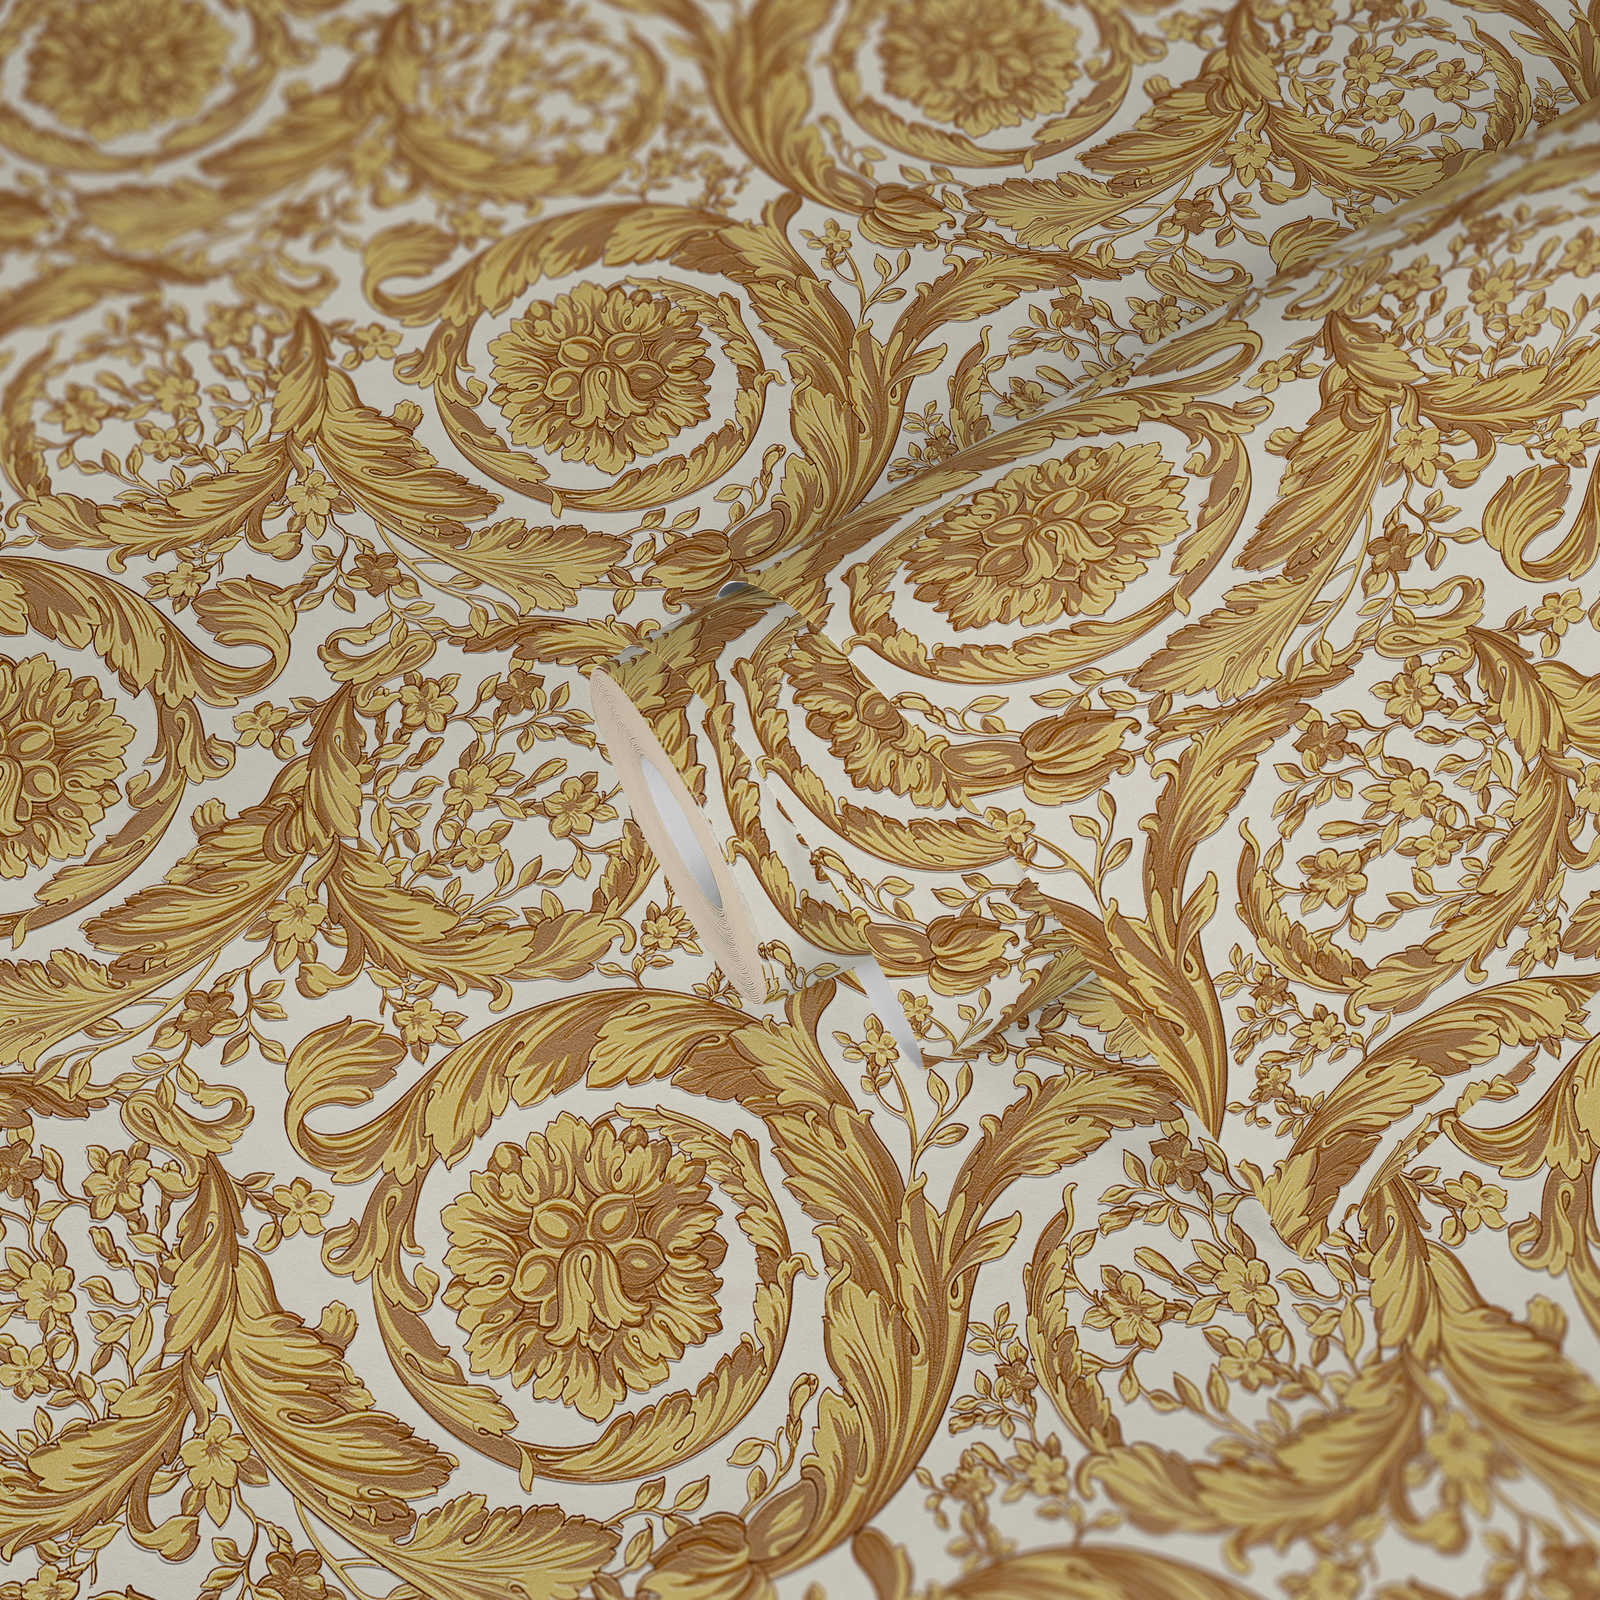             VERSACE wallpaper ornamental floral pattern - gold, yellow, beige
        